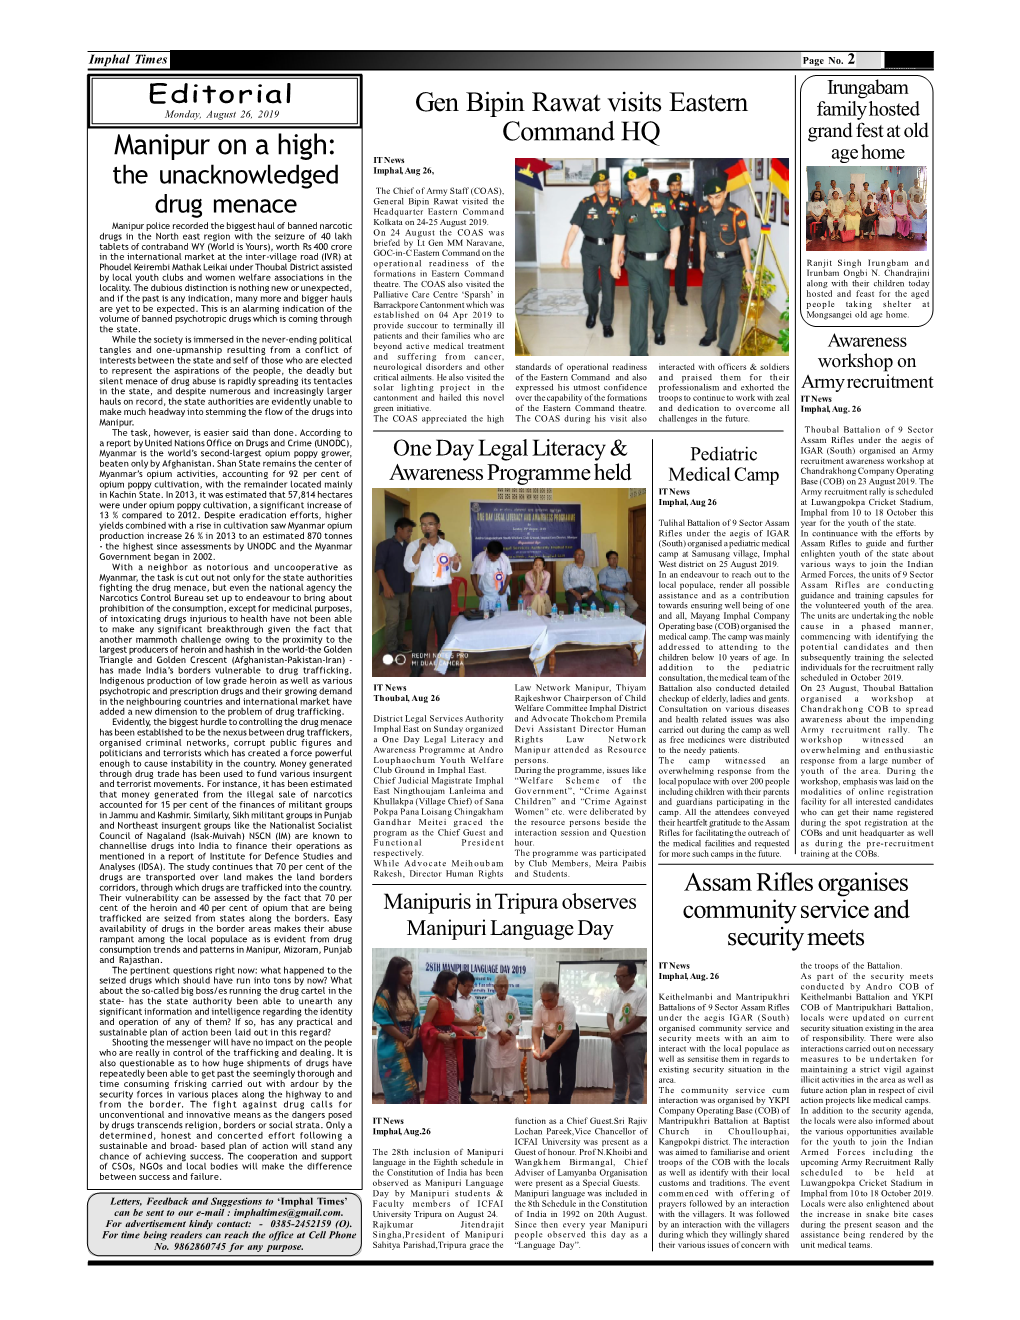 Manipur on a High: Gen Bipin Rawat Visits Eastern